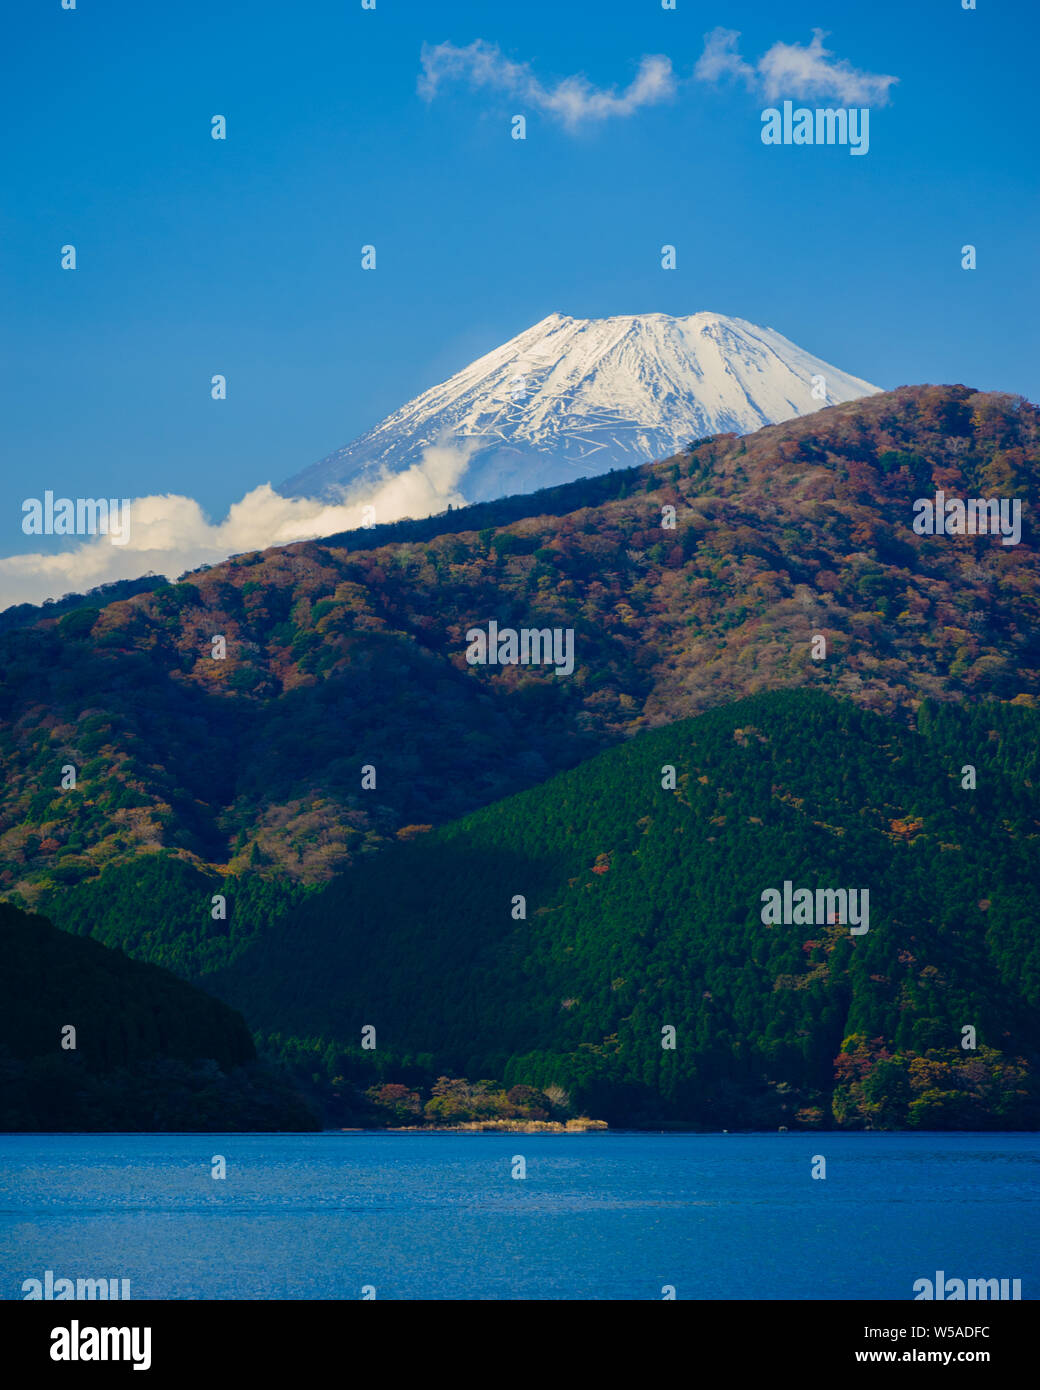 Impressive vew on Mount Fuji (Fuji san) from the shore of Lake Ashi in Fuji Hakone National Park, shot during daytime, Japan Noveber 2018 Stock Photo